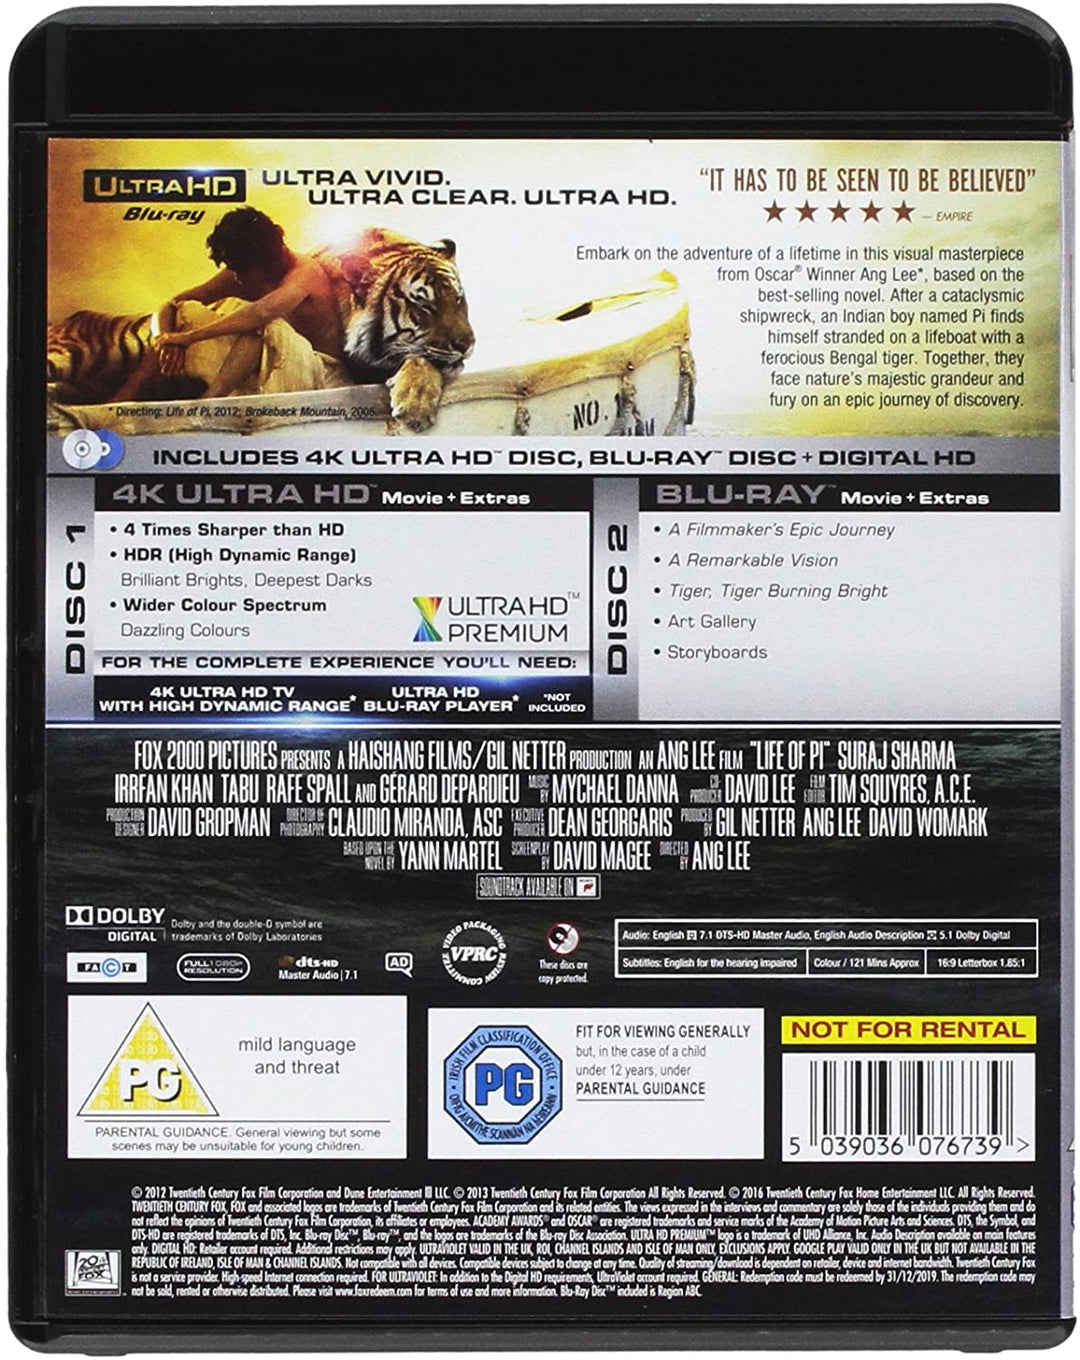 Life Of Pi (2013) UHD - Adventure/Drama [Blu-ray]